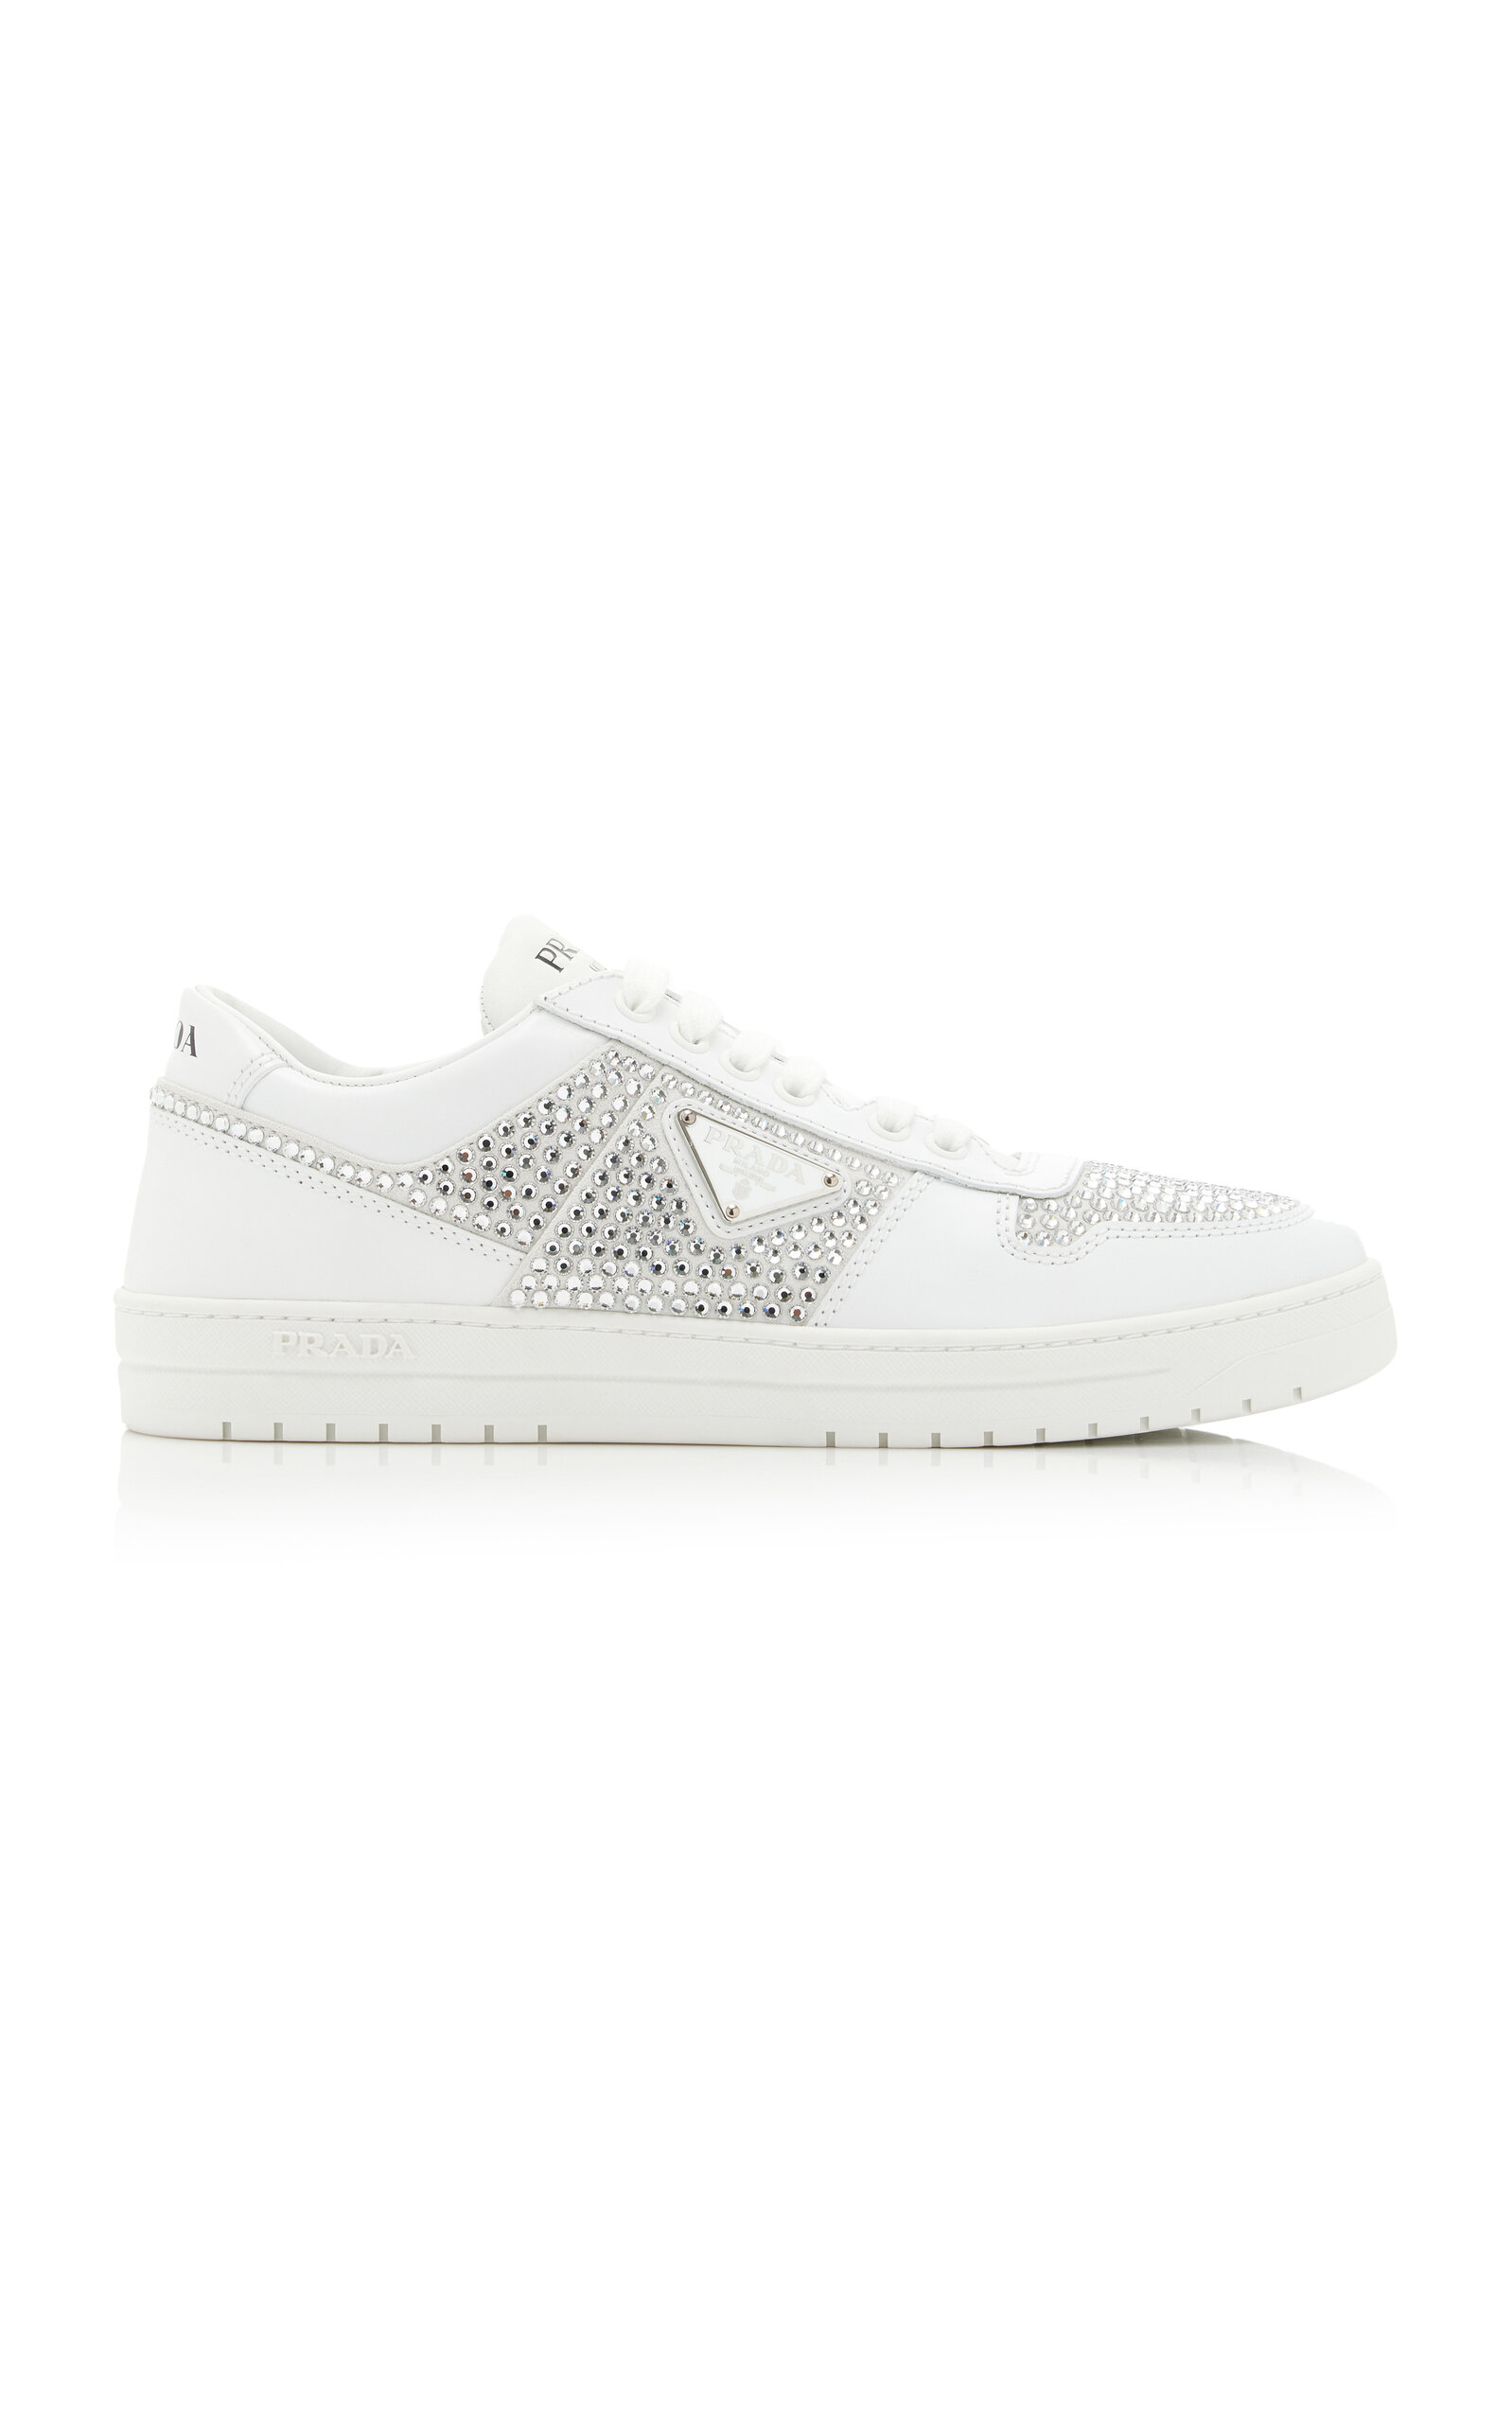 Prada - Downtown Crystal-Embellished Leather Sneakers - White - IT 38 - Moda Operandi